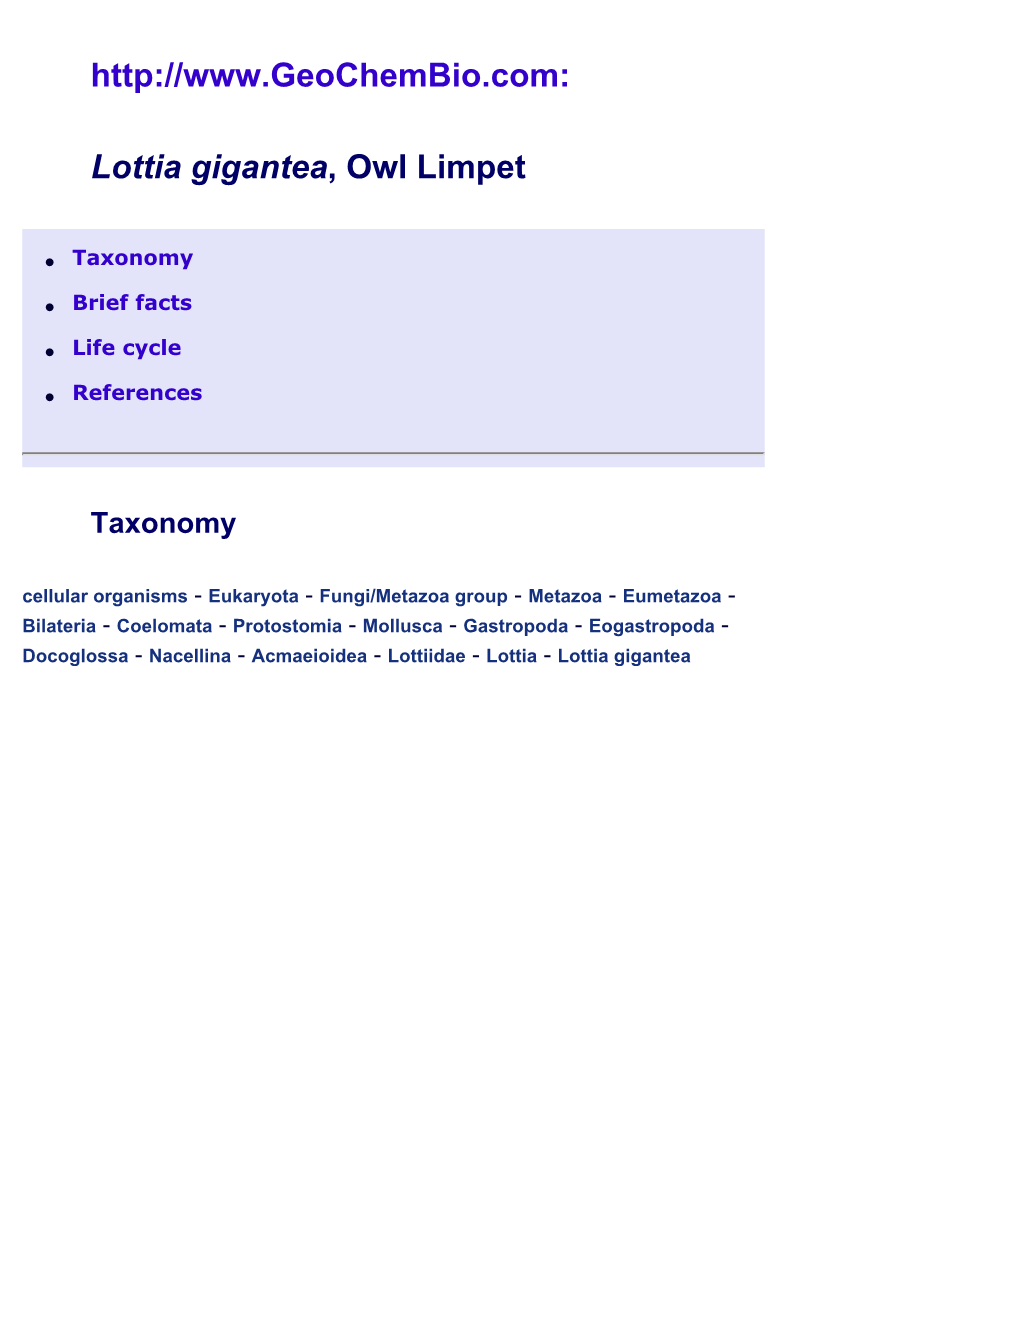 Lottia Gigantea, Owl Limpet